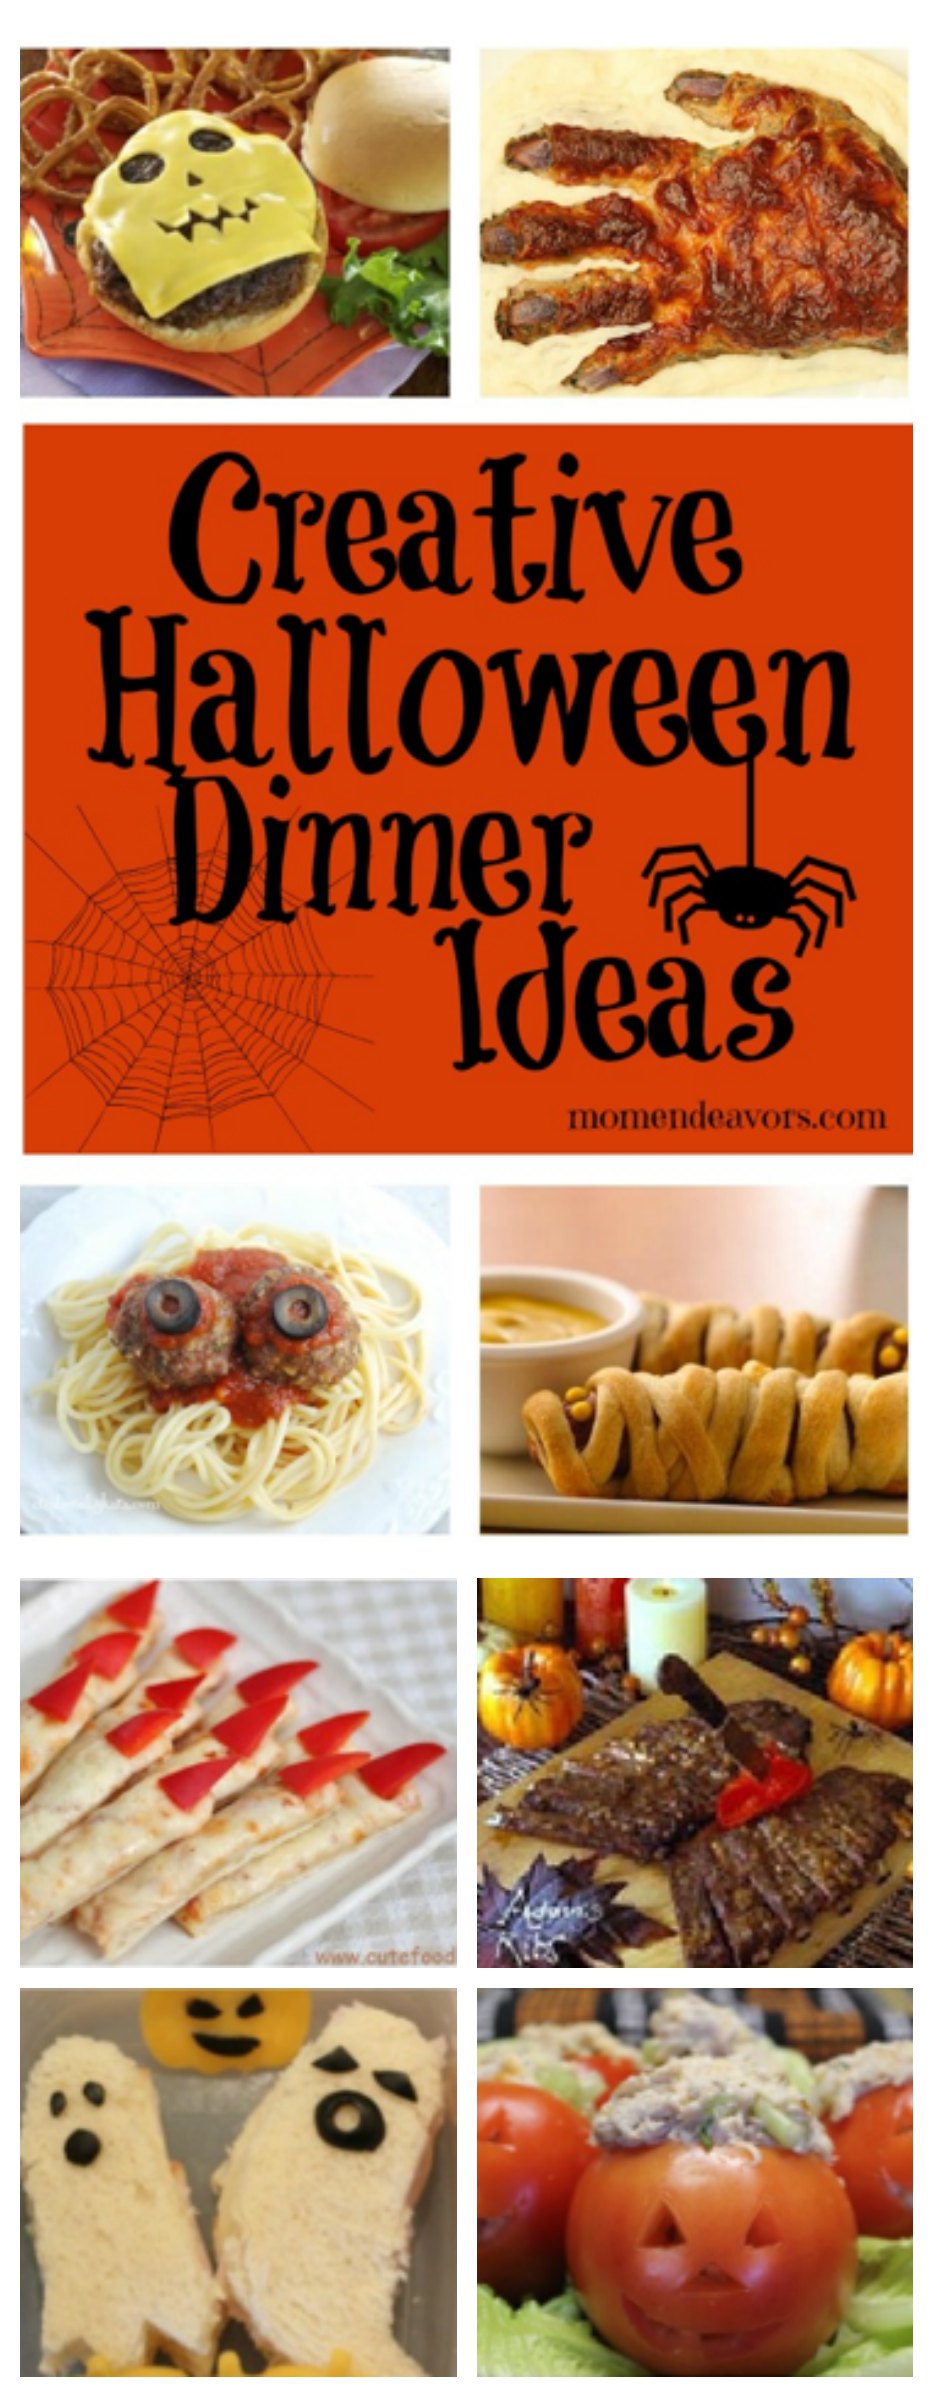 15+ Creative Halloween Dinner Ideas